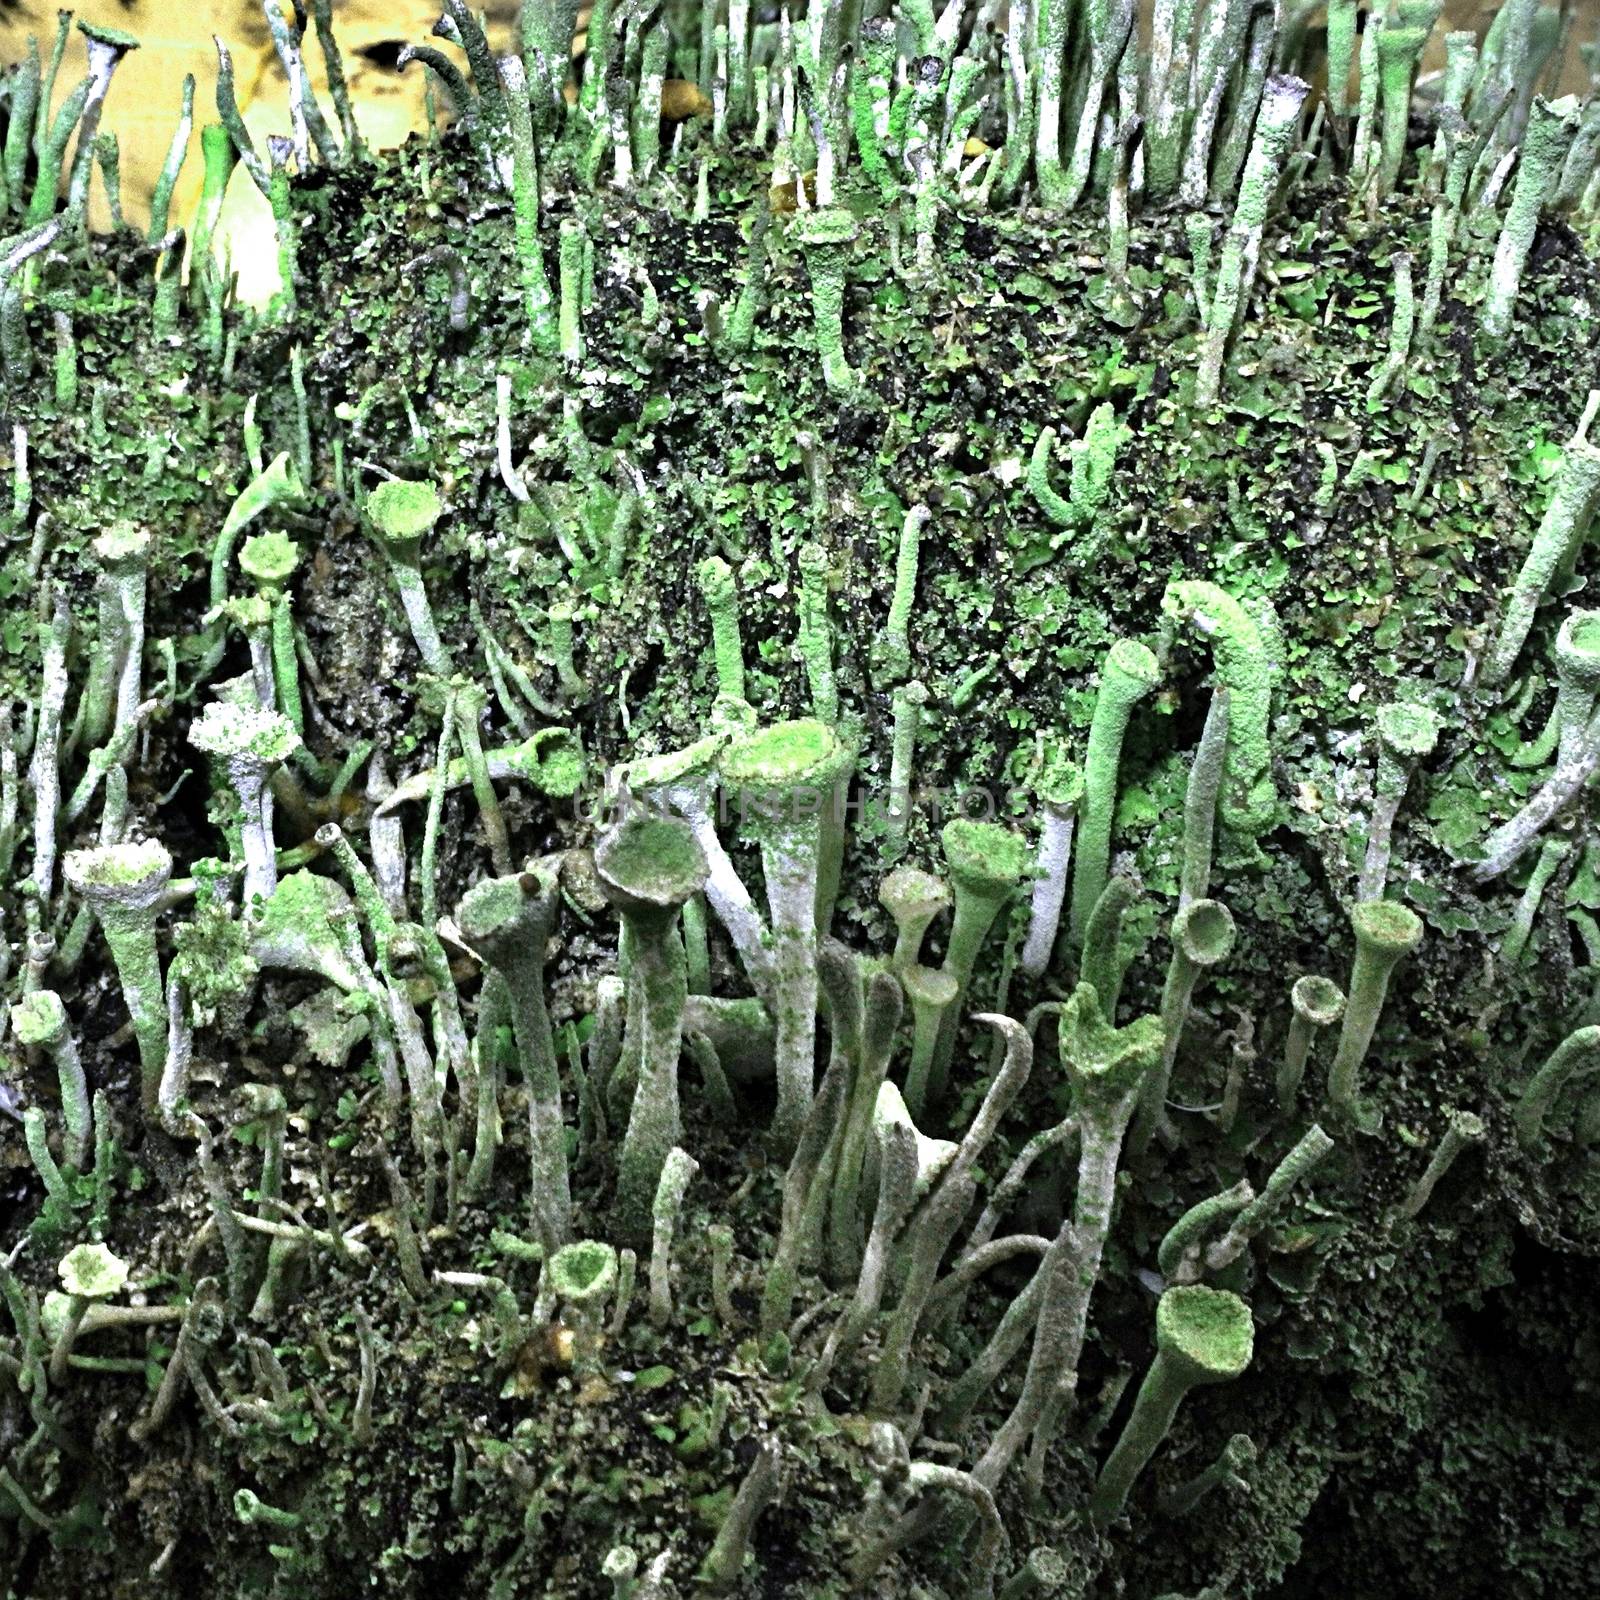 Macro closeup cyan lichen Cladonia species in green moss. Shallow focus